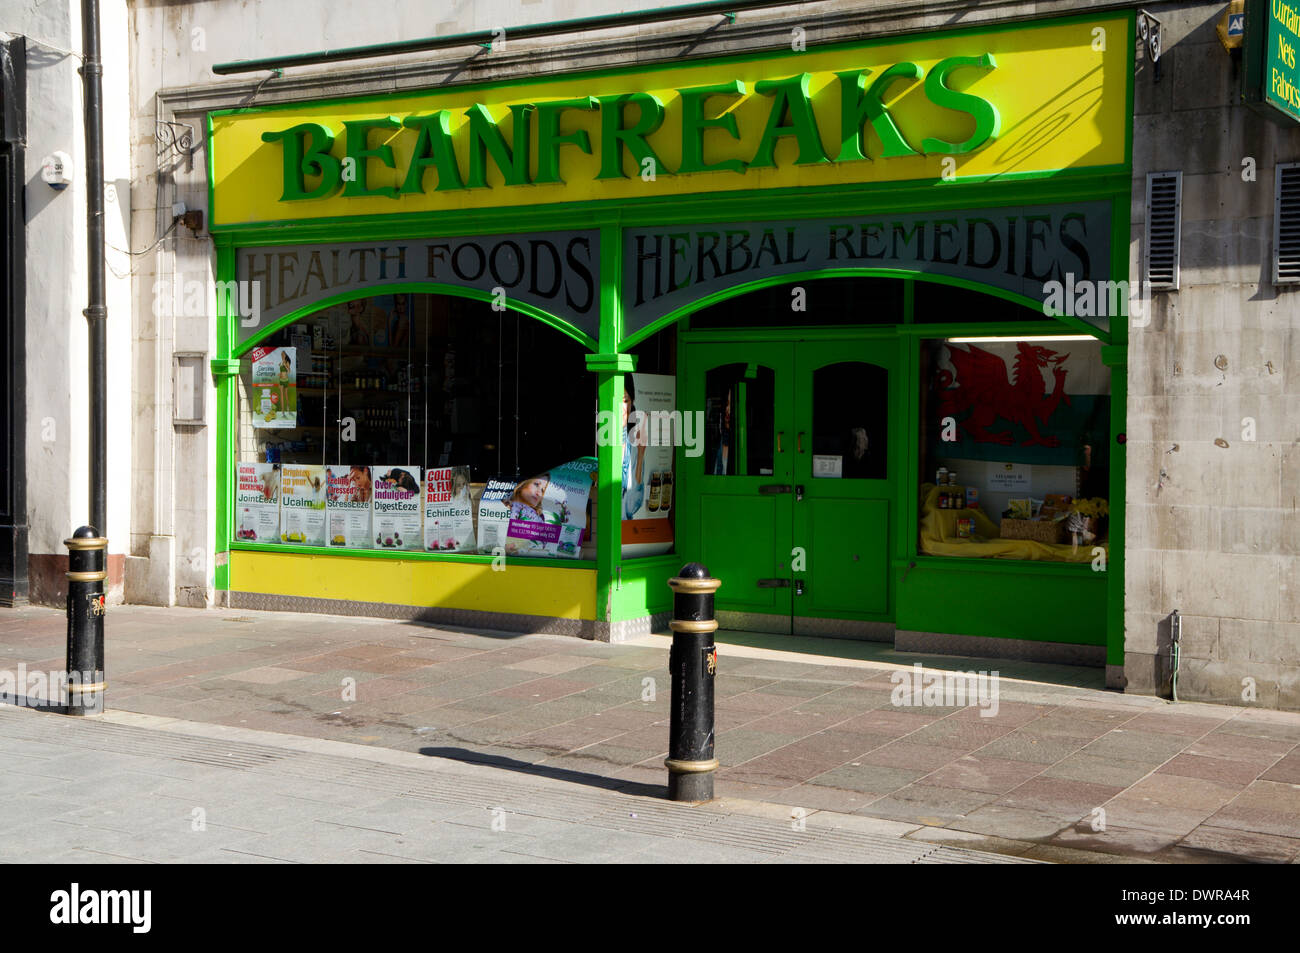 Beanfreaks Health food shop, High Street, Cardiff, Wales. Stock Photo